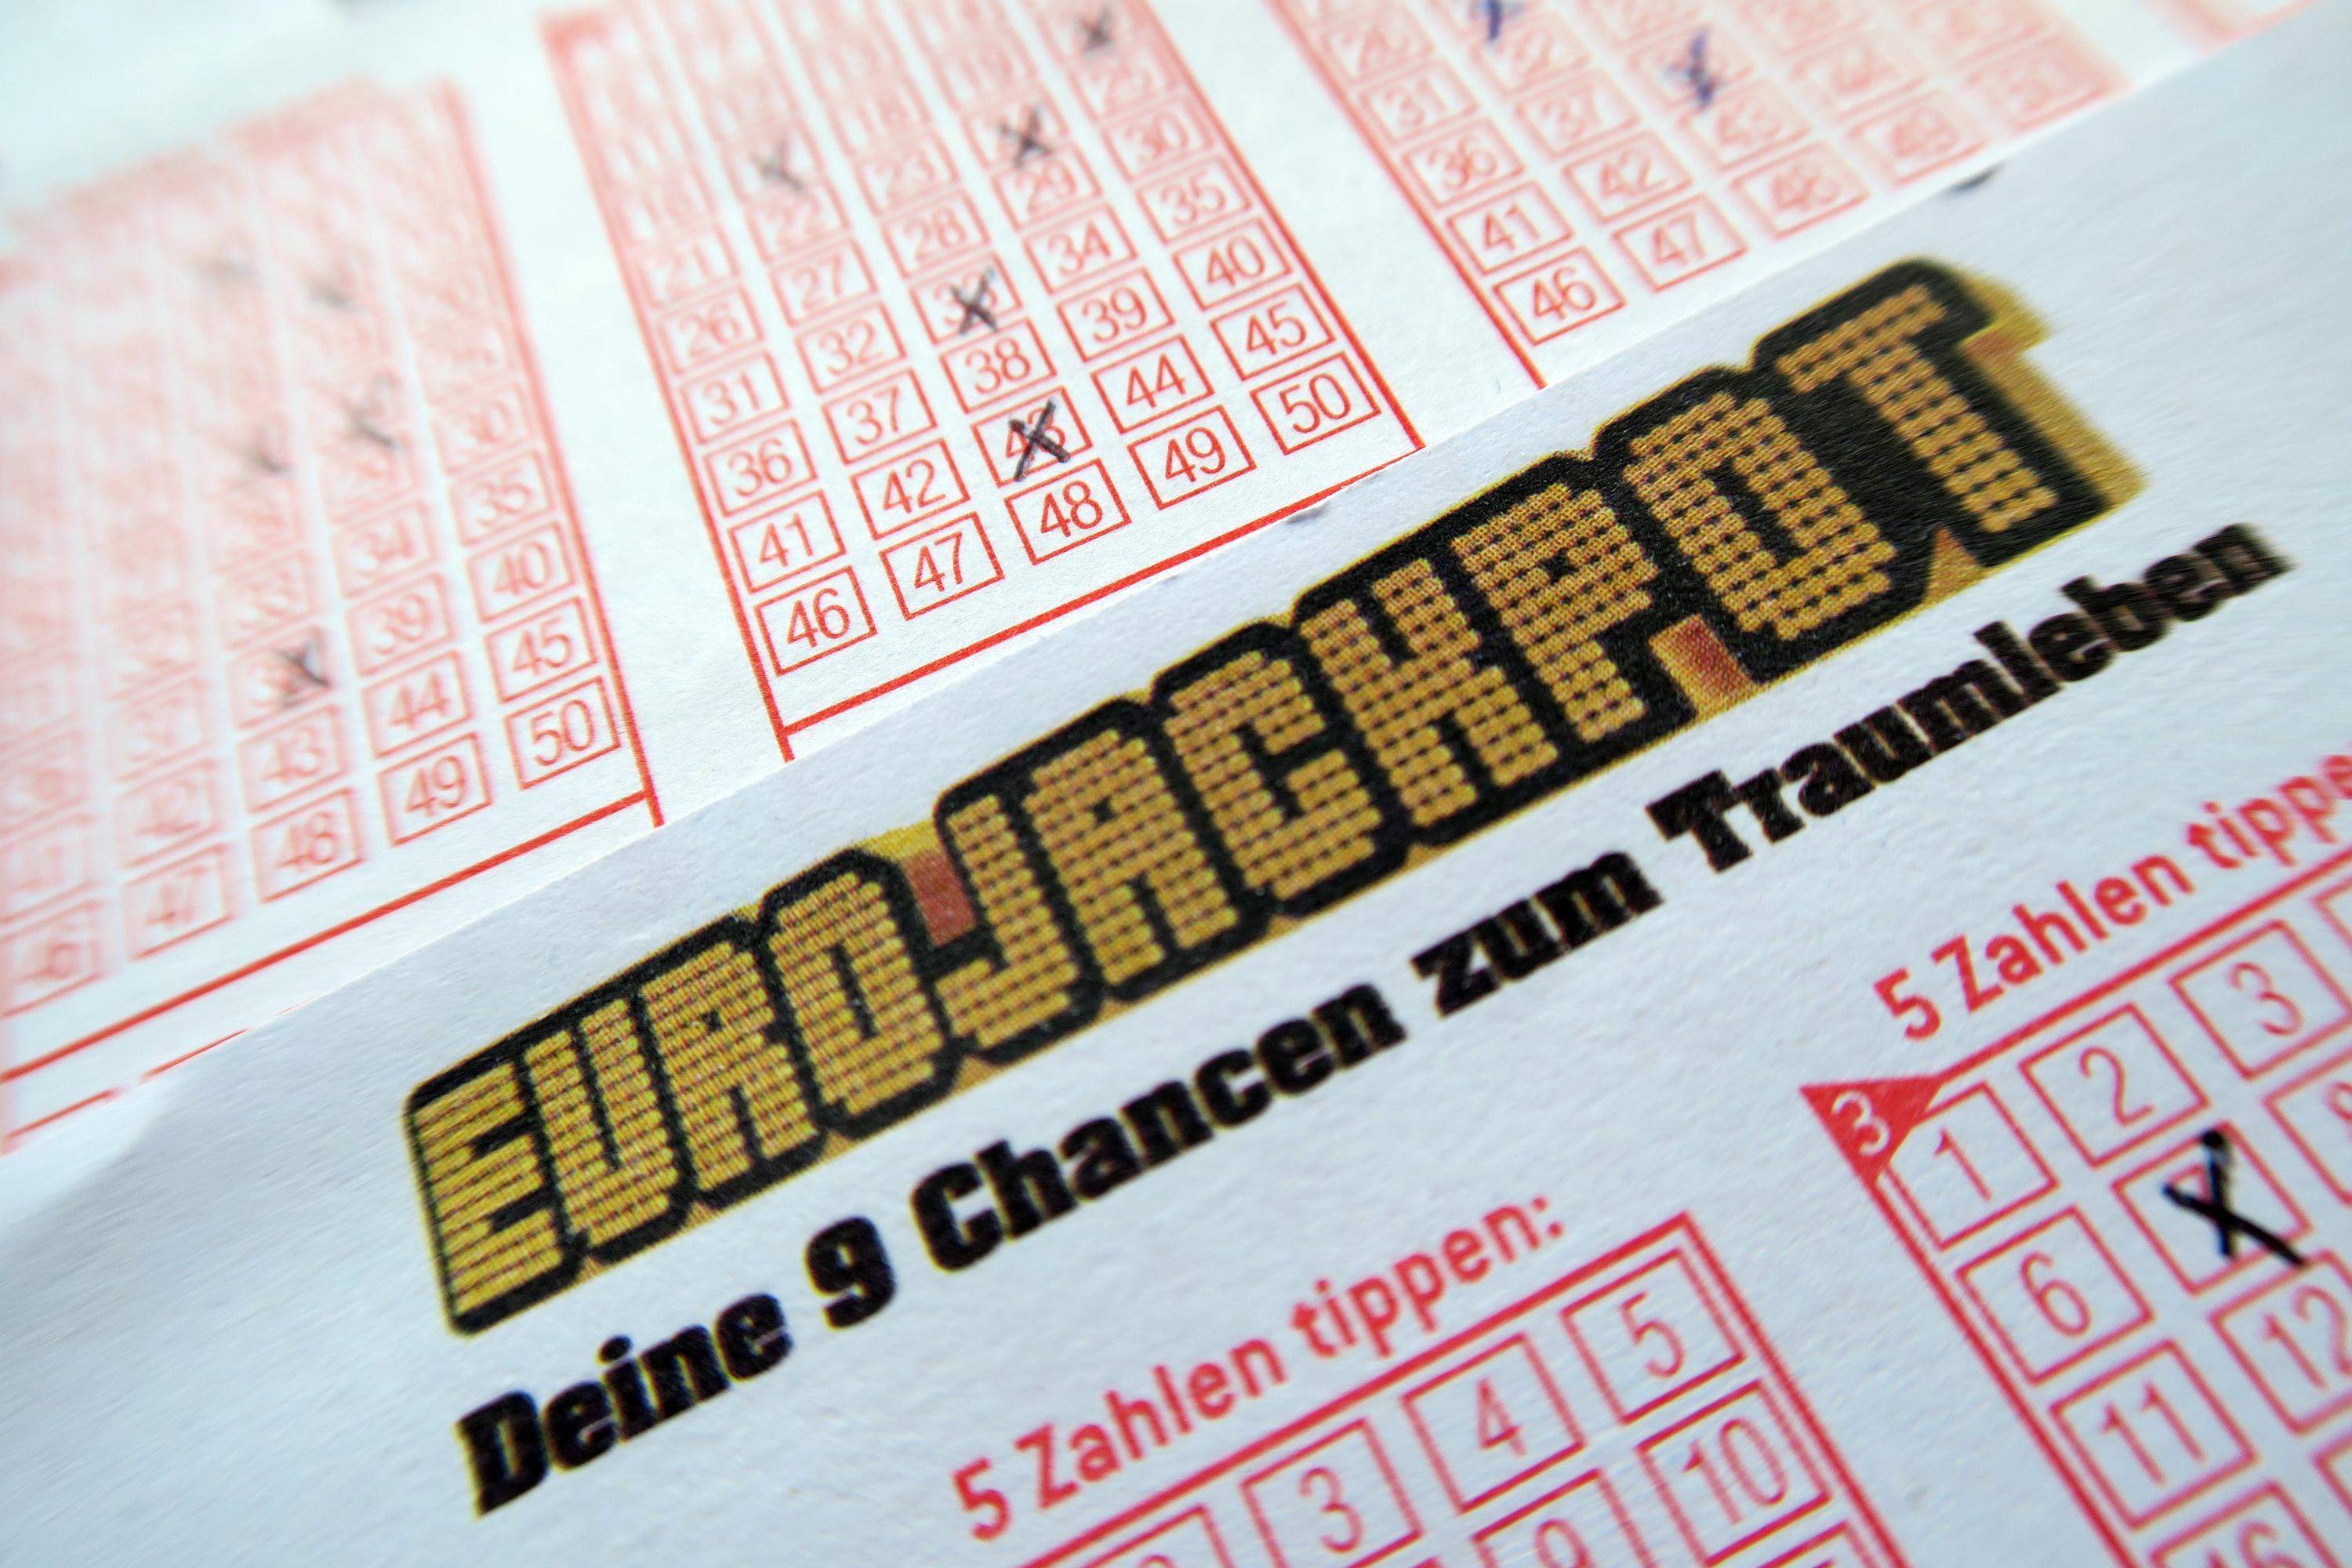 west lotto eurojackpot